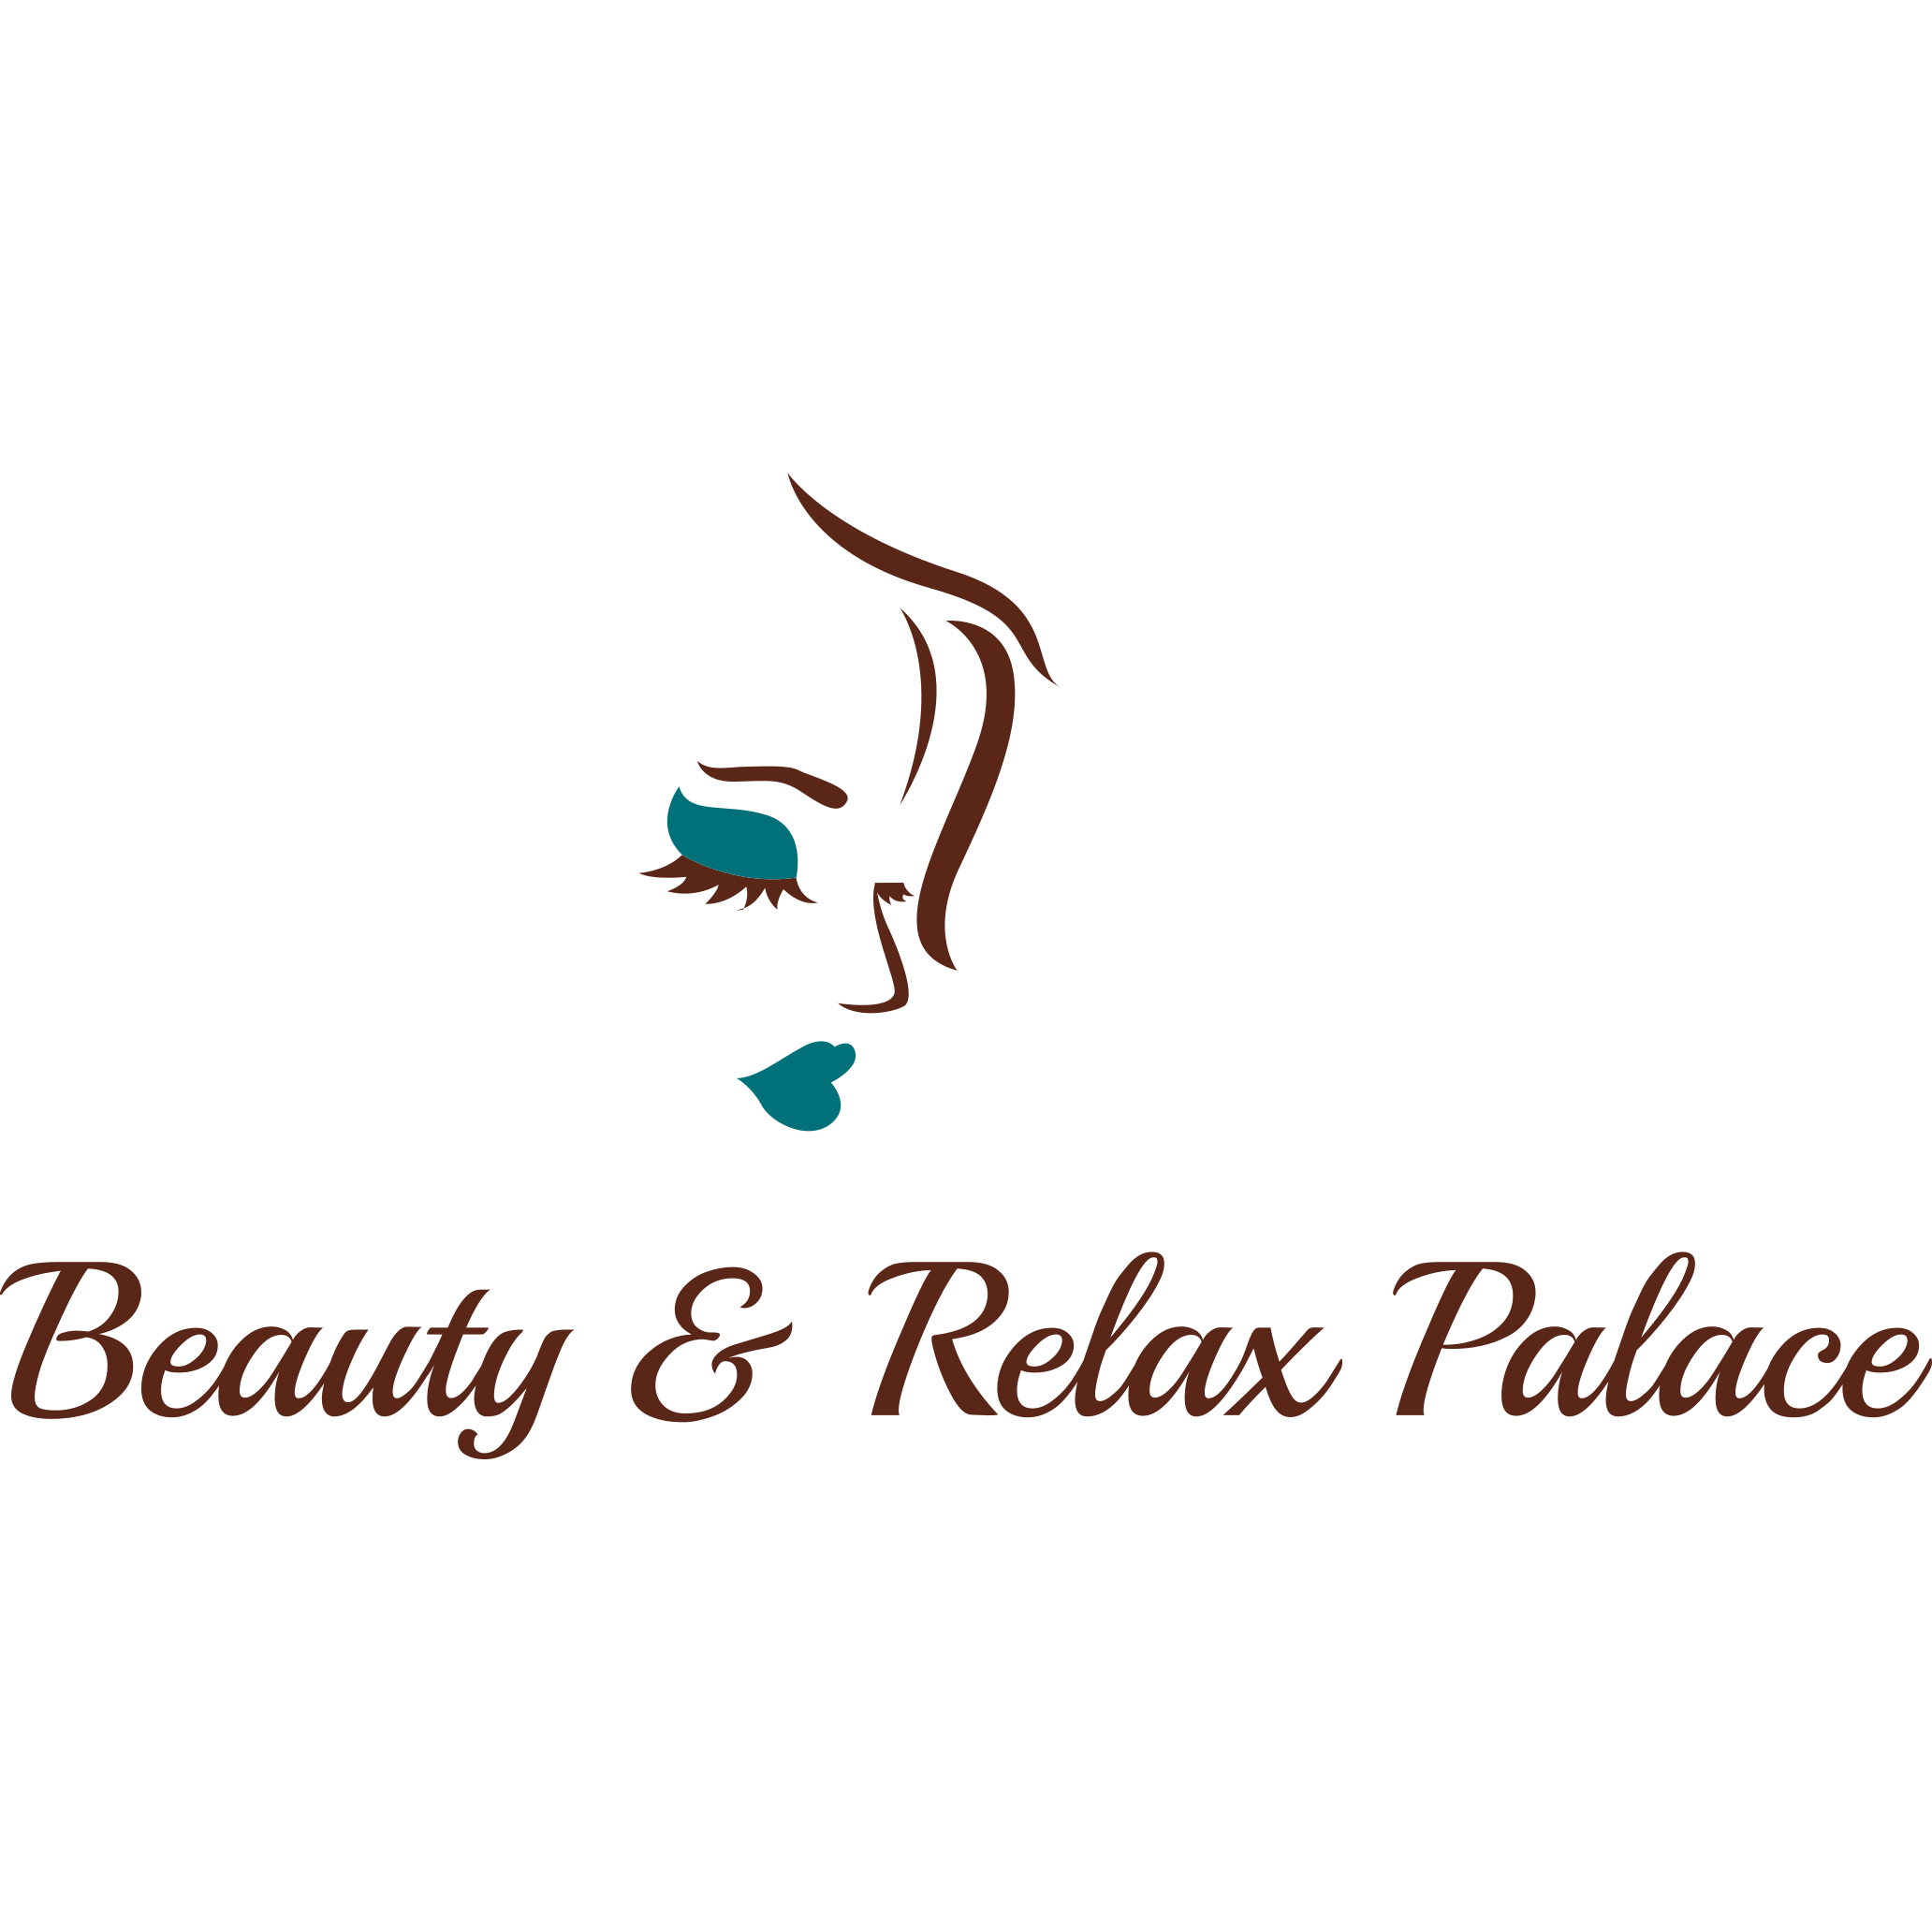 Beauty & Relax Palace by Ljubic Logo